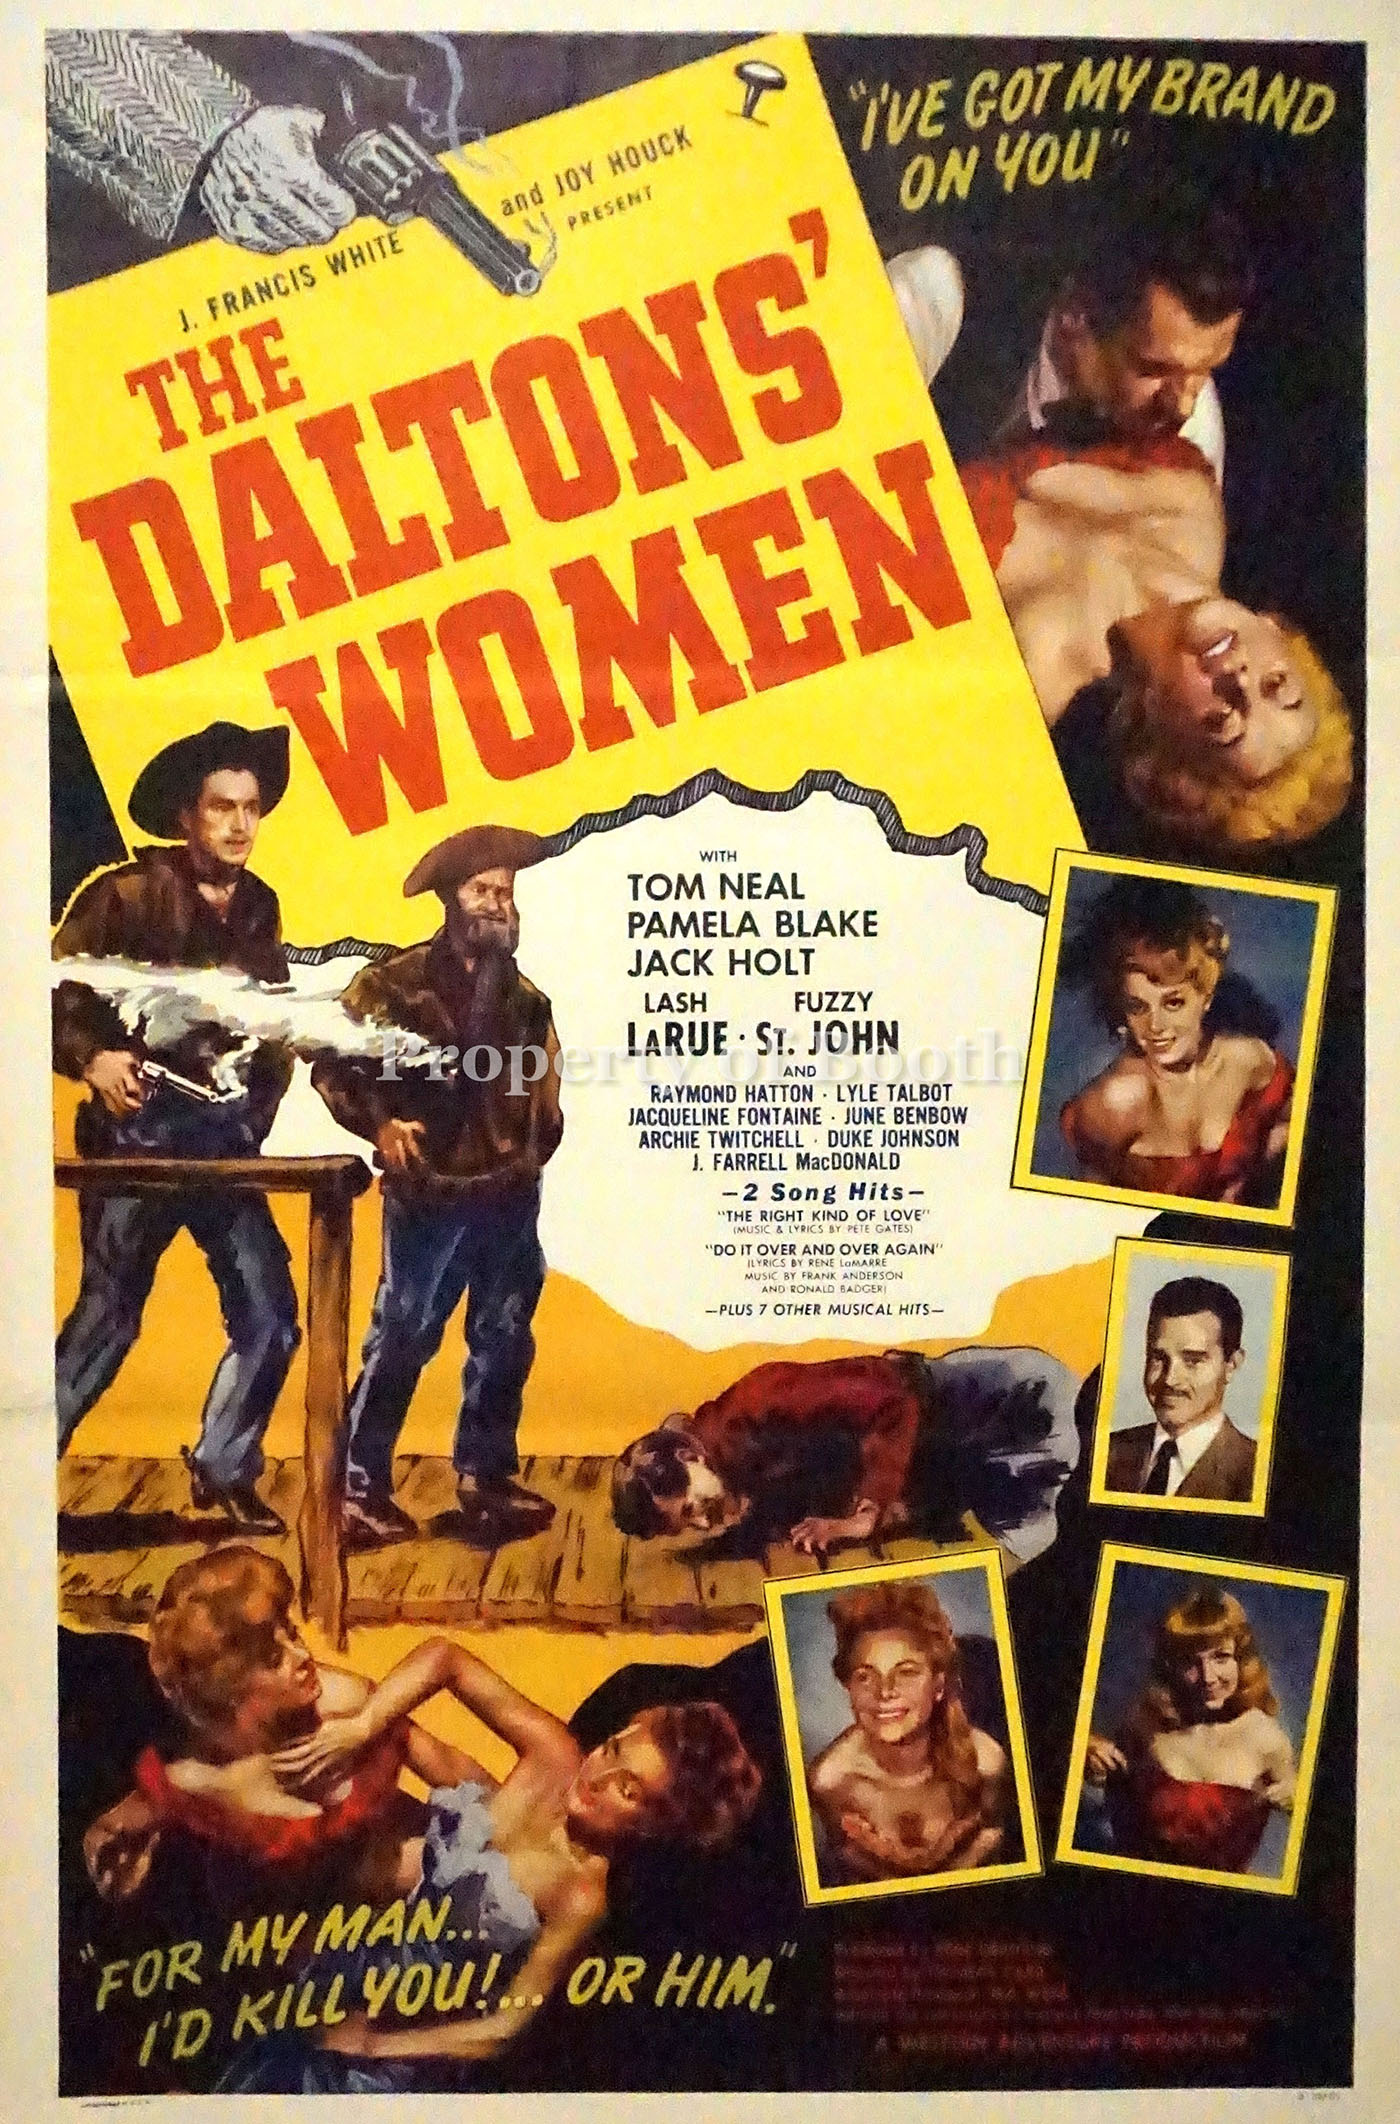 1950, The Daltons' Women, 40 x 26.75"